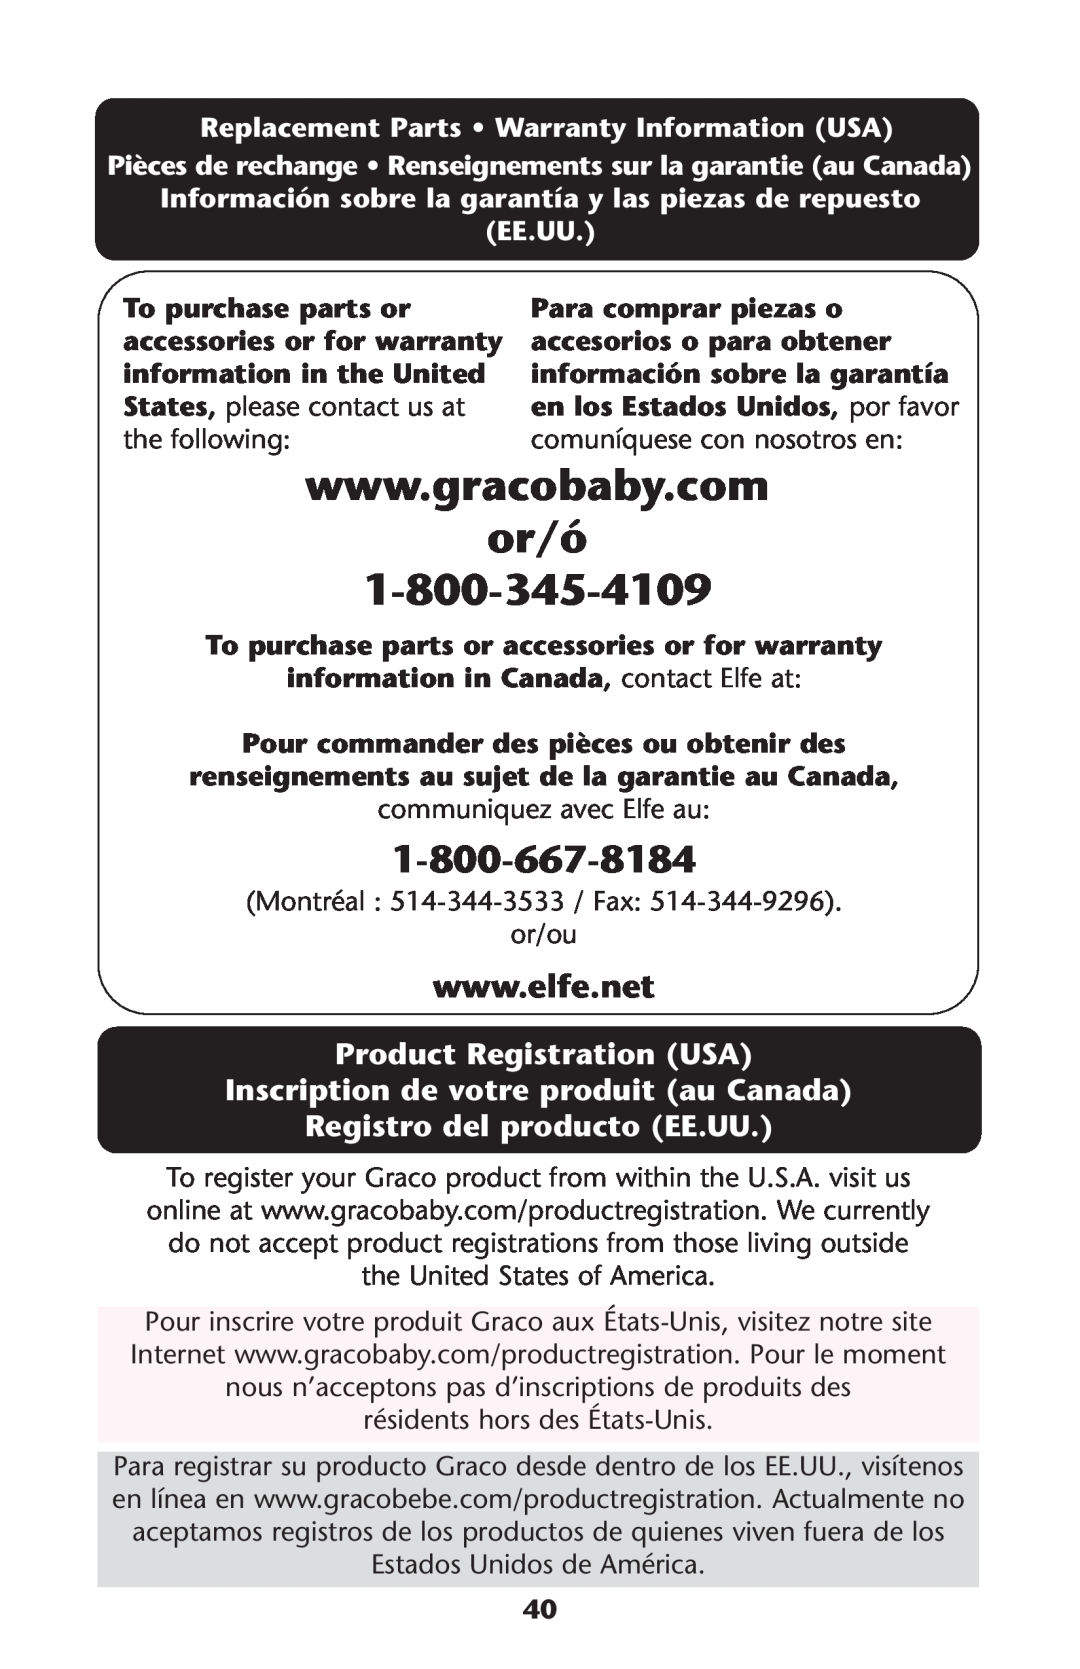 Graco ISPA108AB manual or/ó, Product Registration USA Inscription de votre produit au Canada, Registro del producto EE.UU 